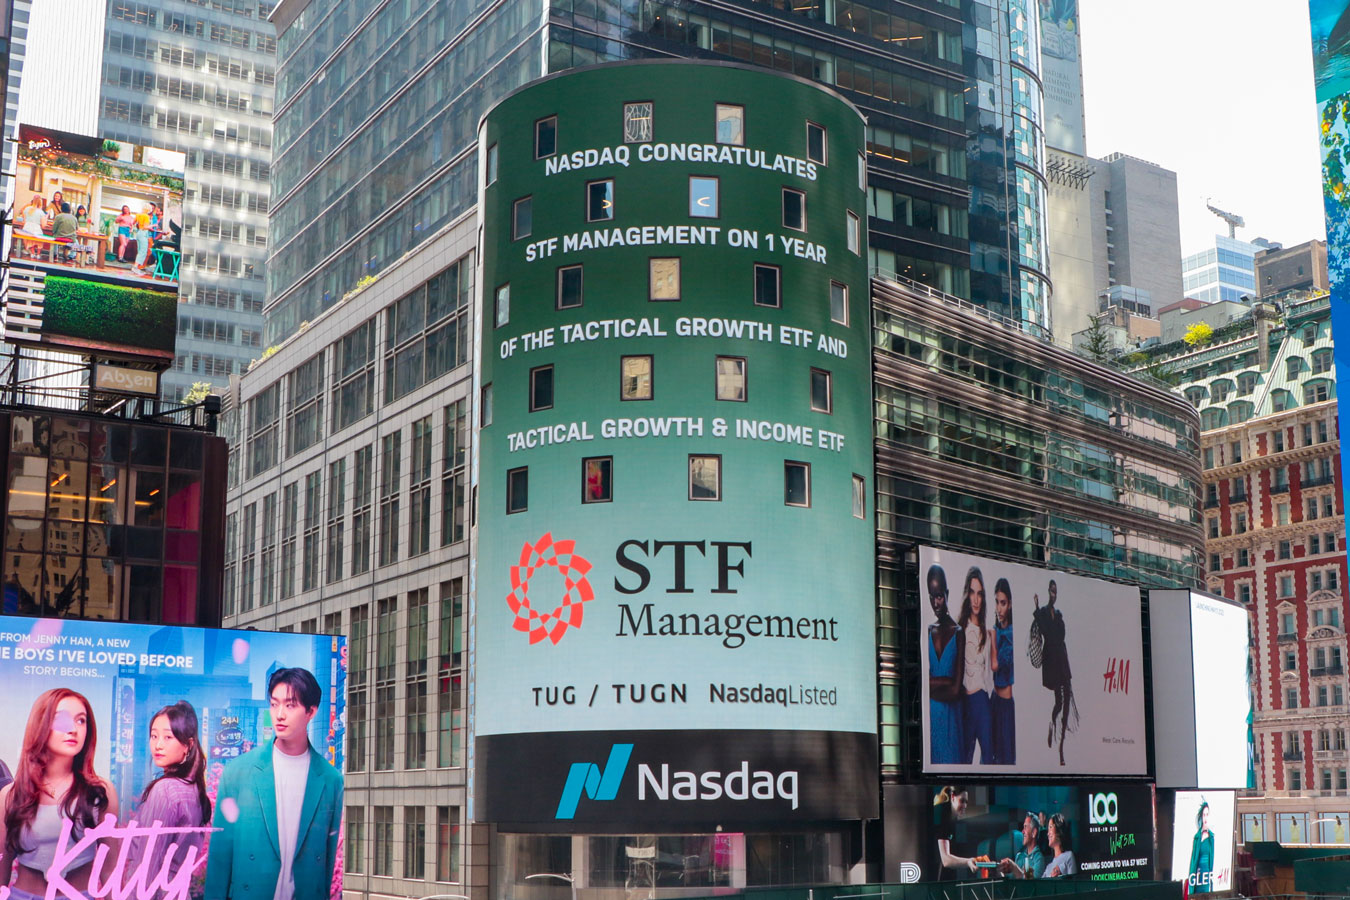 Photo of "STF Management | Nasdaq" on a large display billboard.